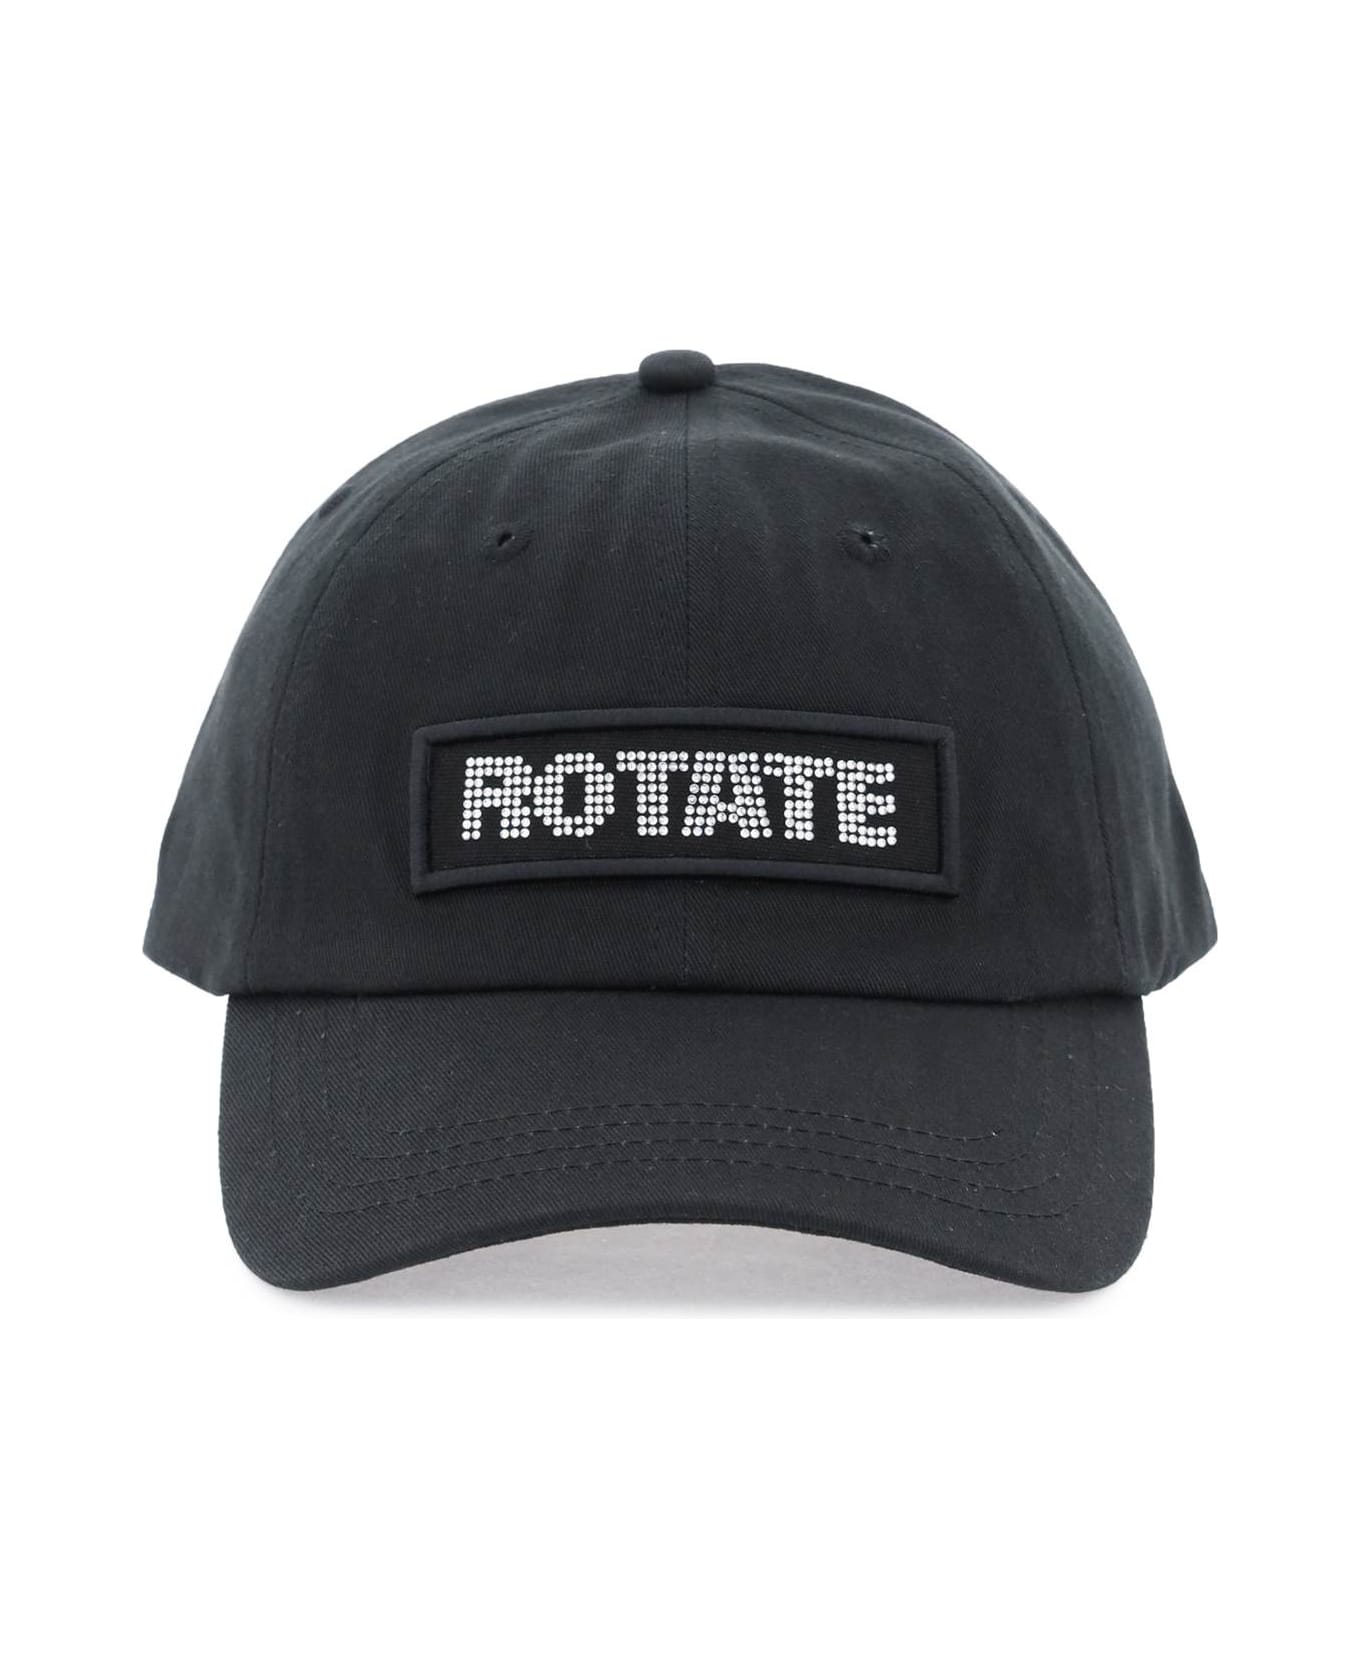 Rotate by Birger Christensen Cotton Baseball Cap clothing With Rhinestone Logo - BLACK (Black)